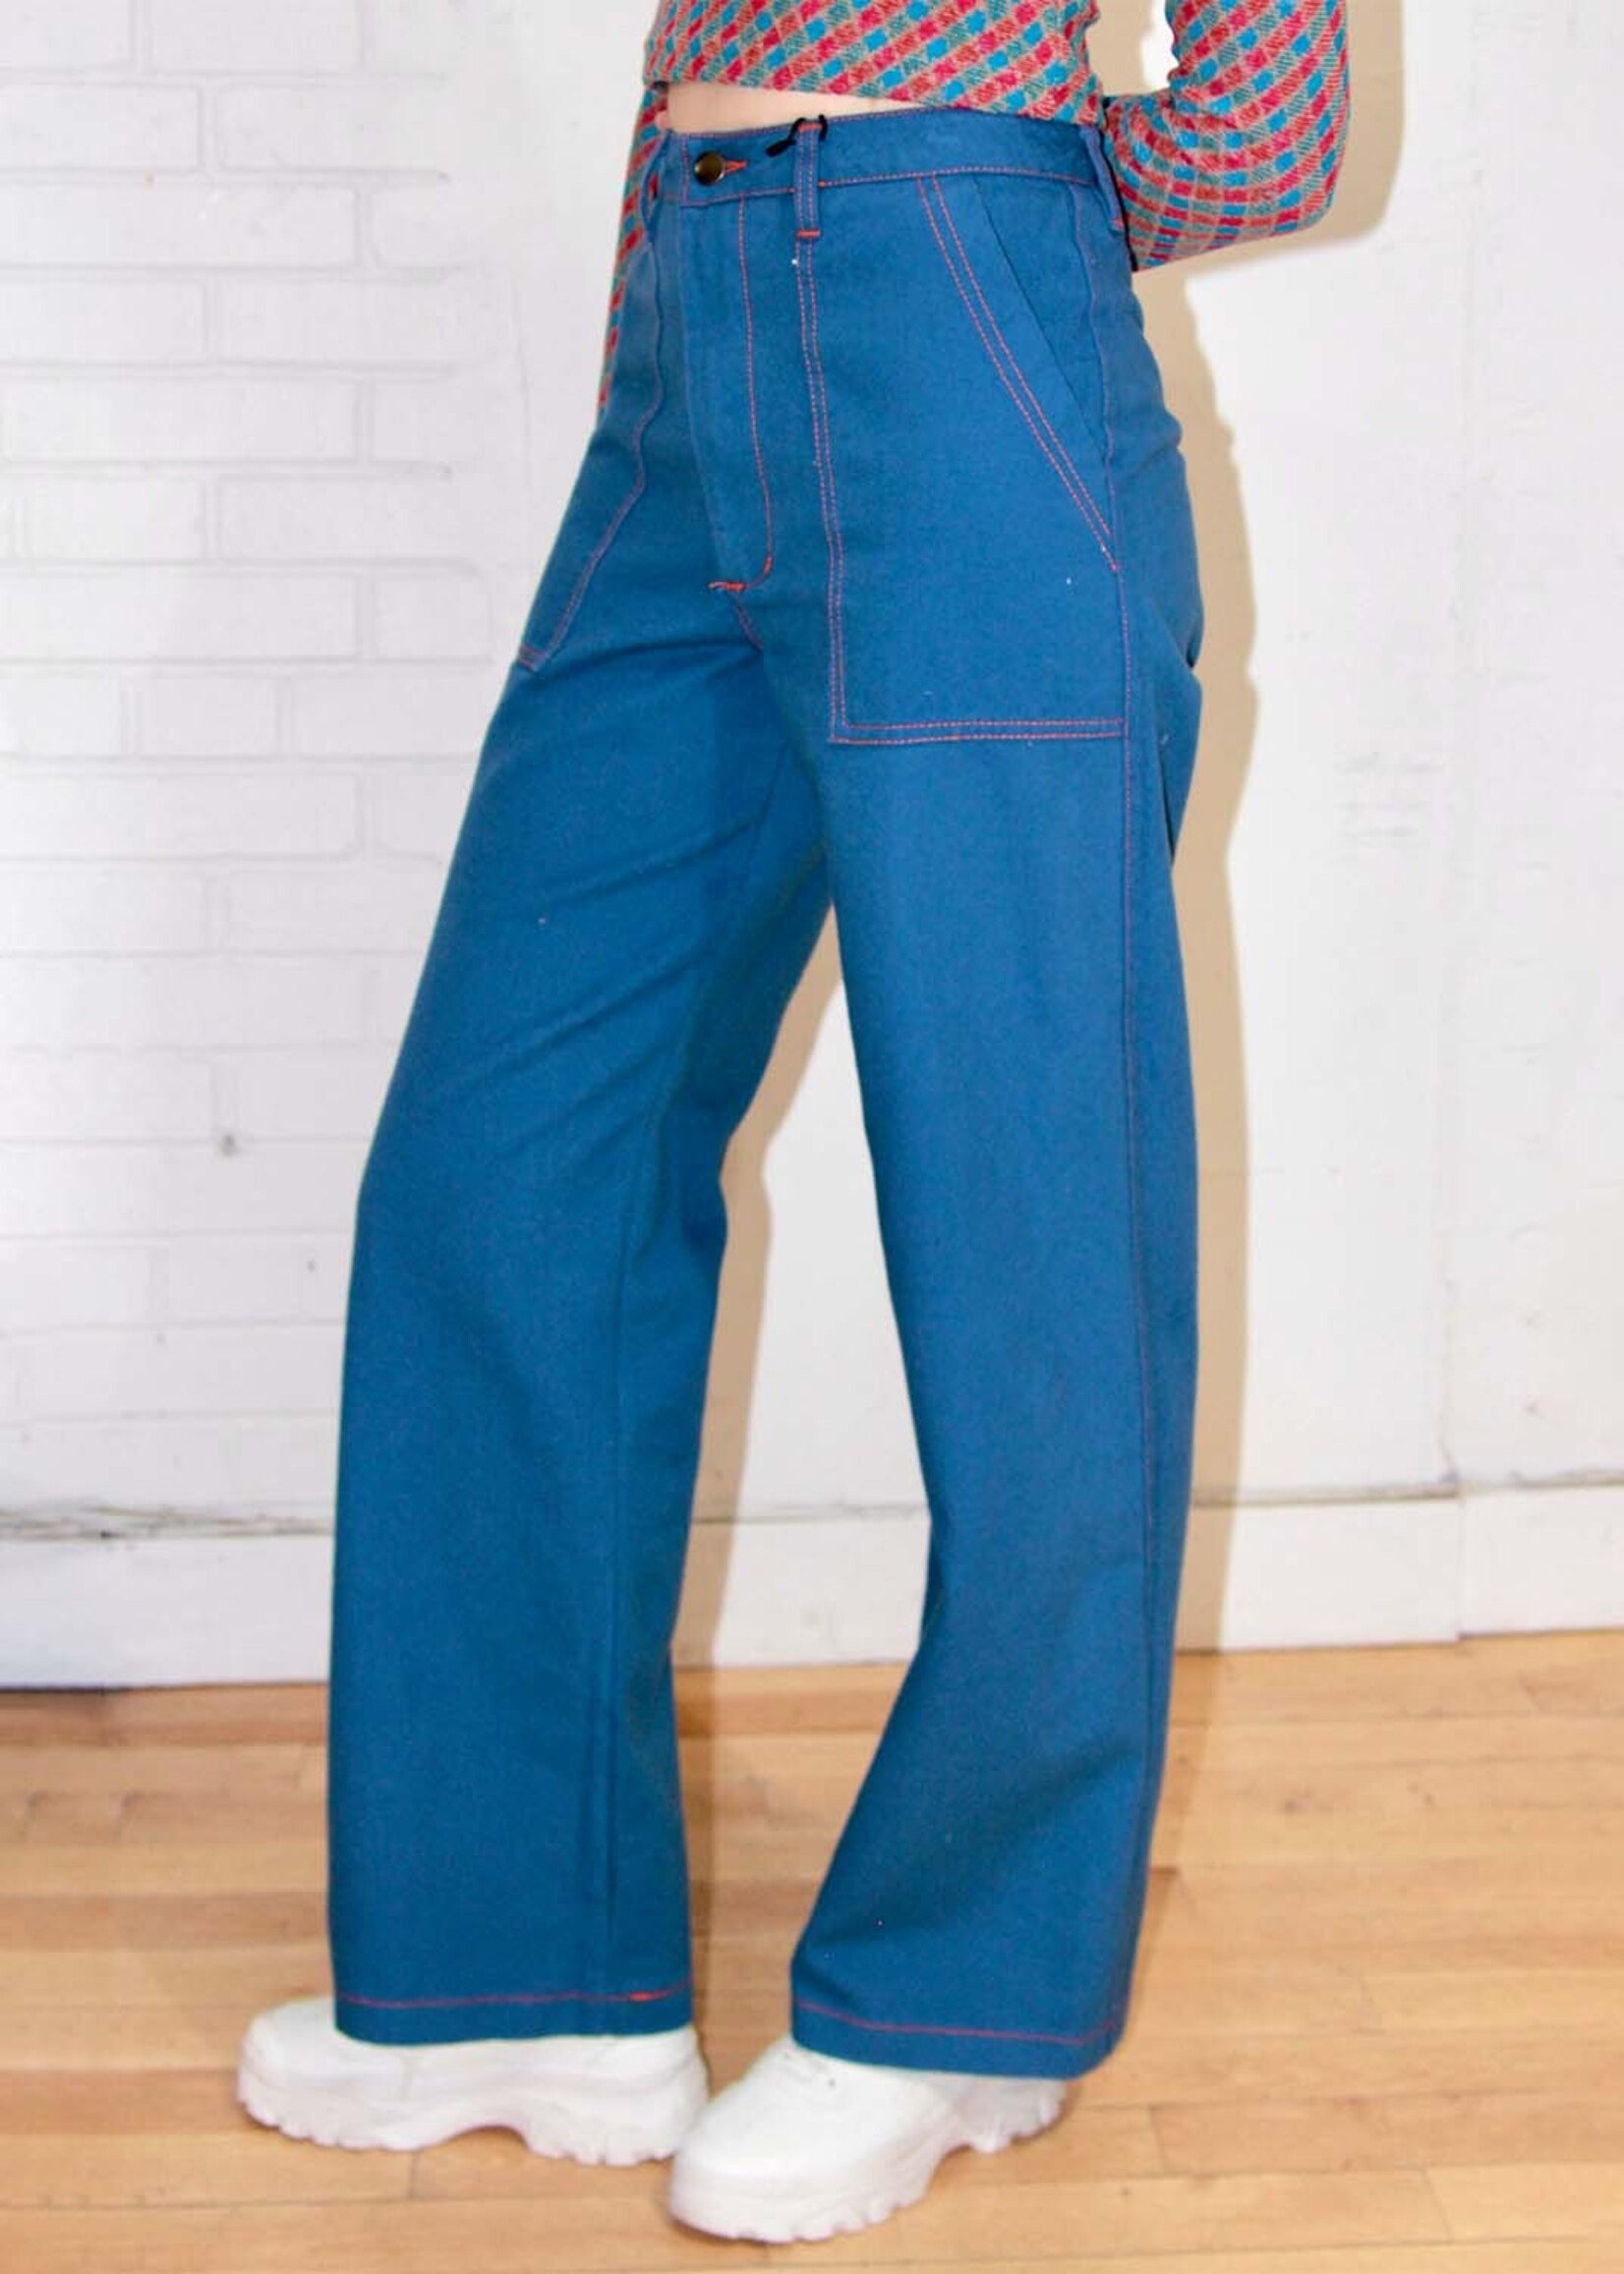 Studio Citizen Carpenter Pants in Blue with Orange Top Stitch